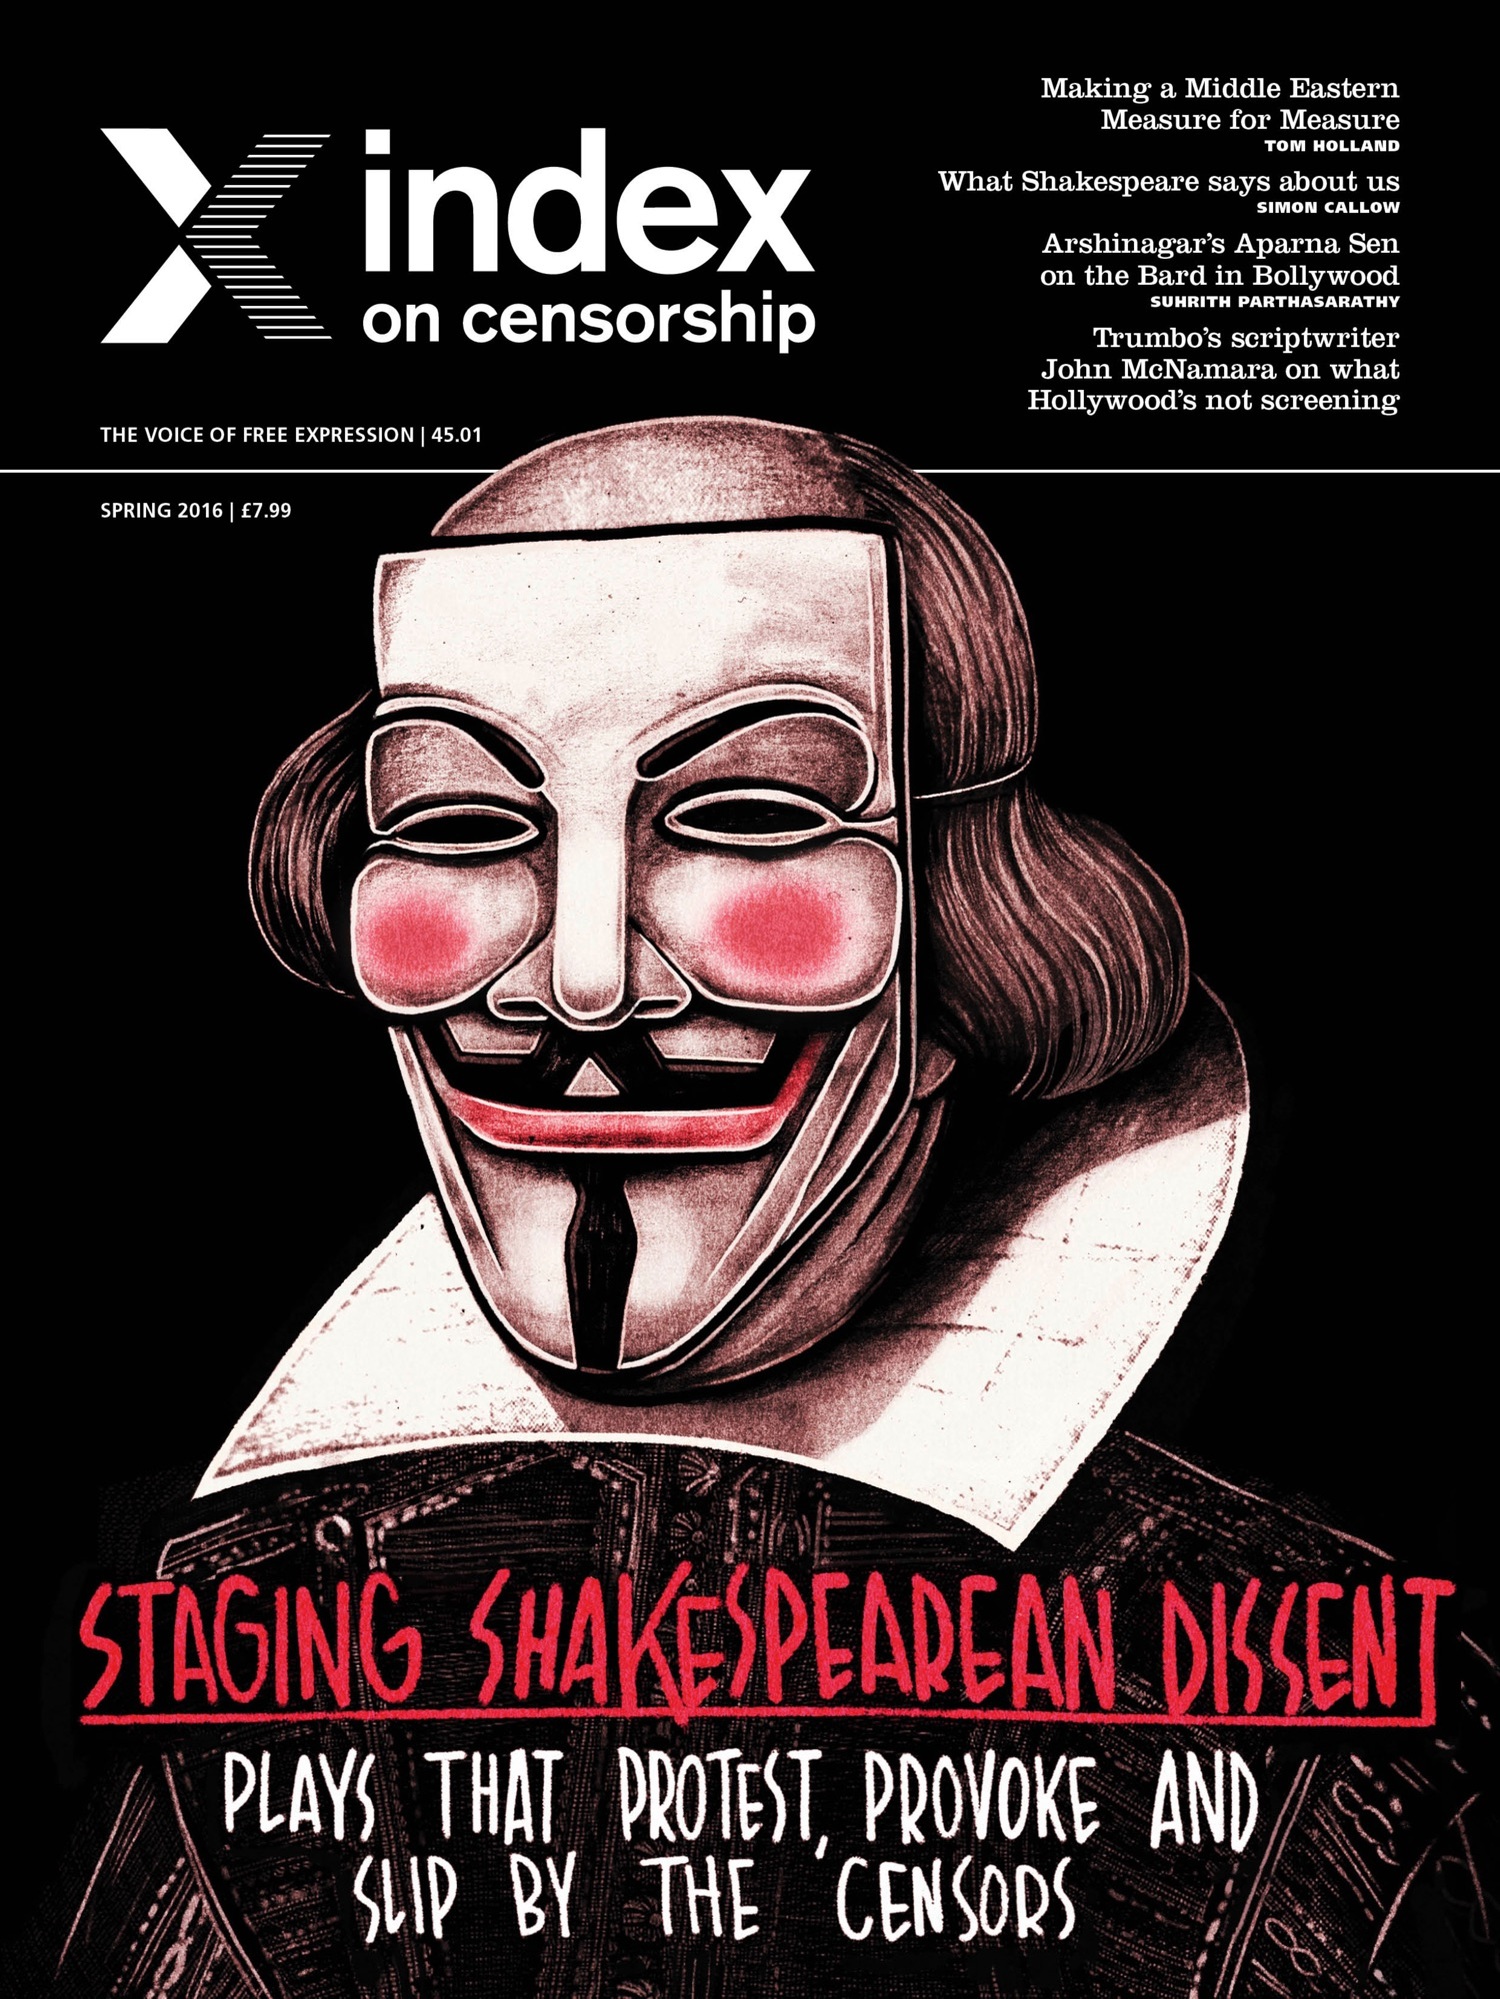 Staging Shakespearean dissent